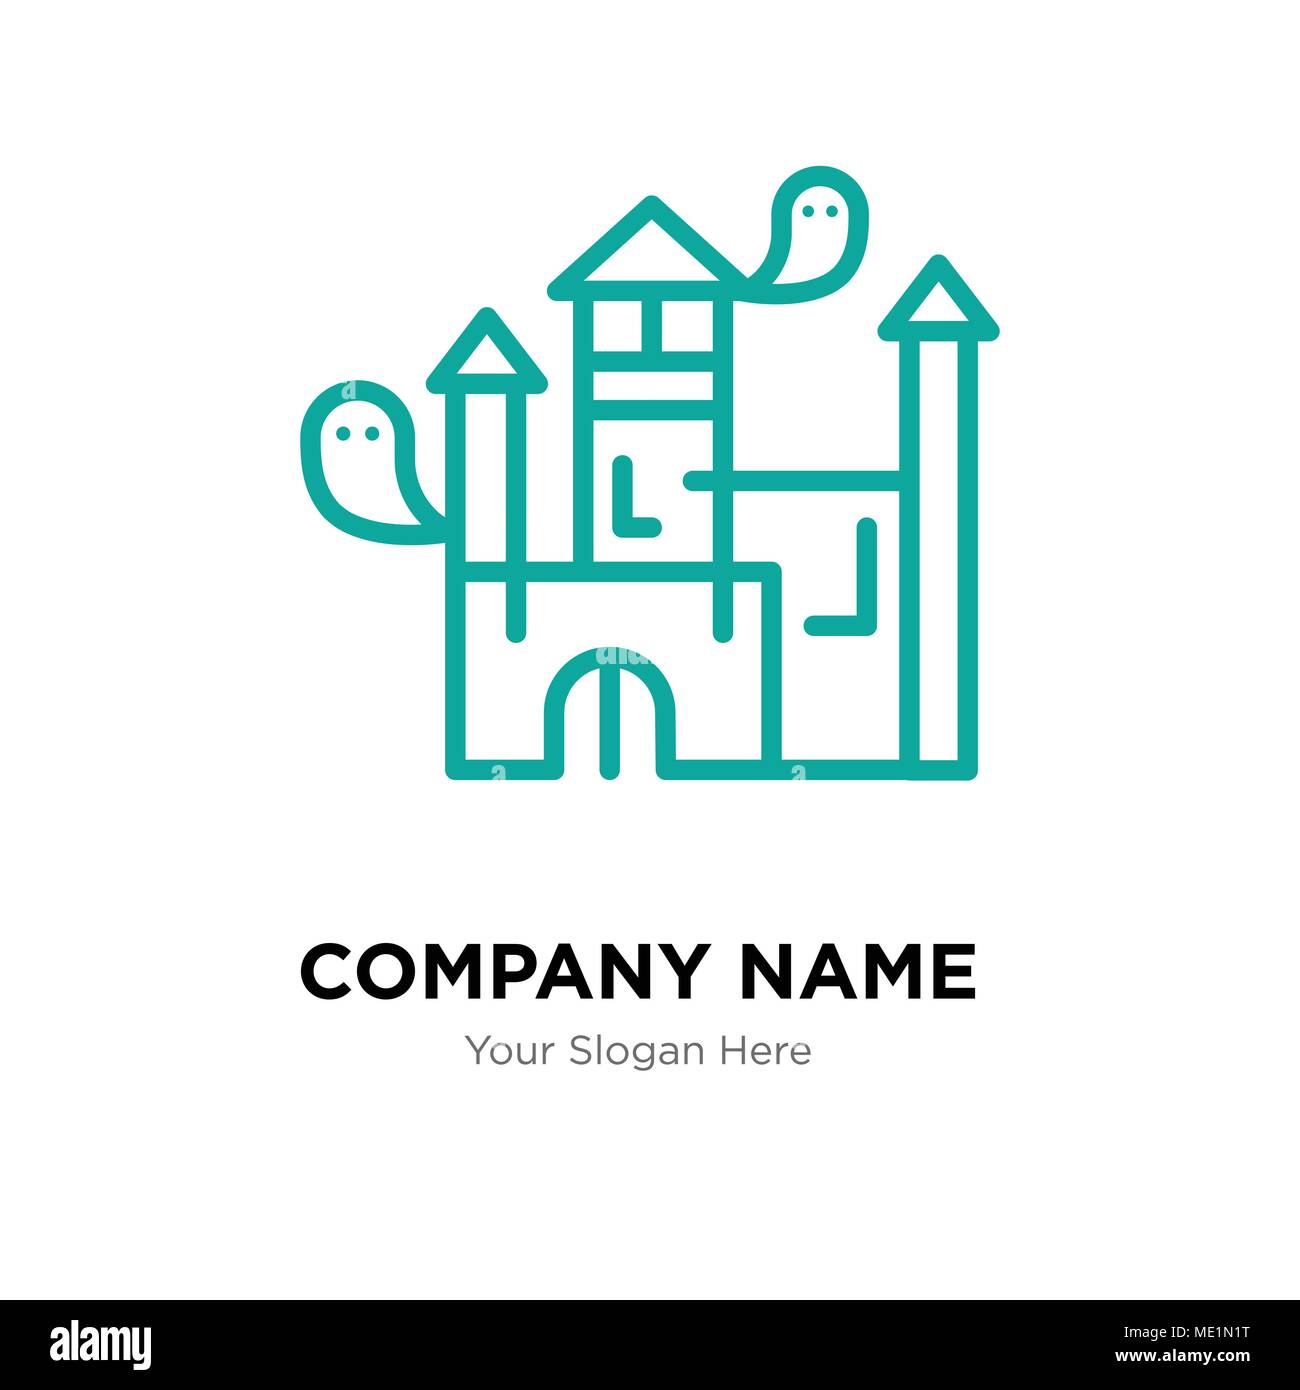 House company logo design template, Business corporate vector icon Stock Vector